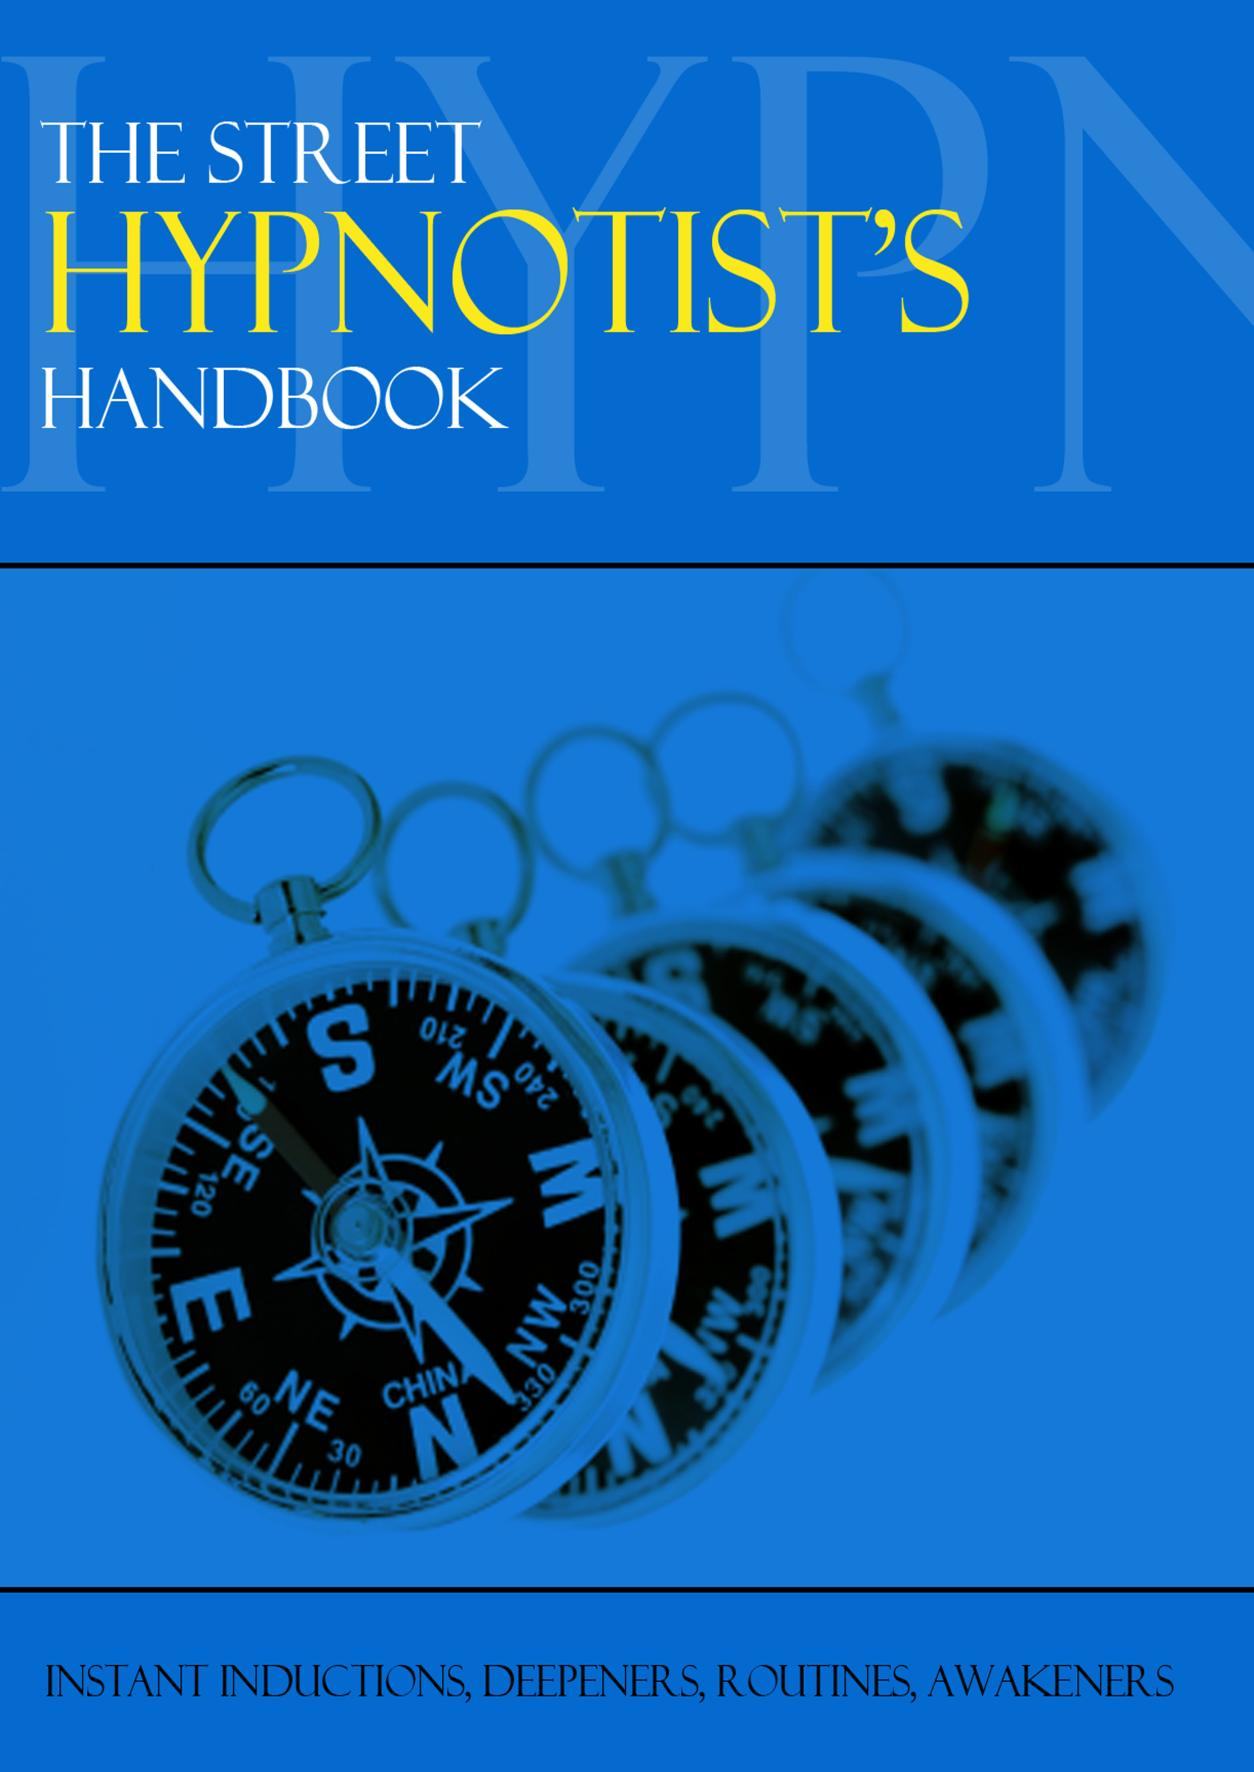 Effective Hypnosis - The Street Hypnosis Handbook(SECOND EDITION)